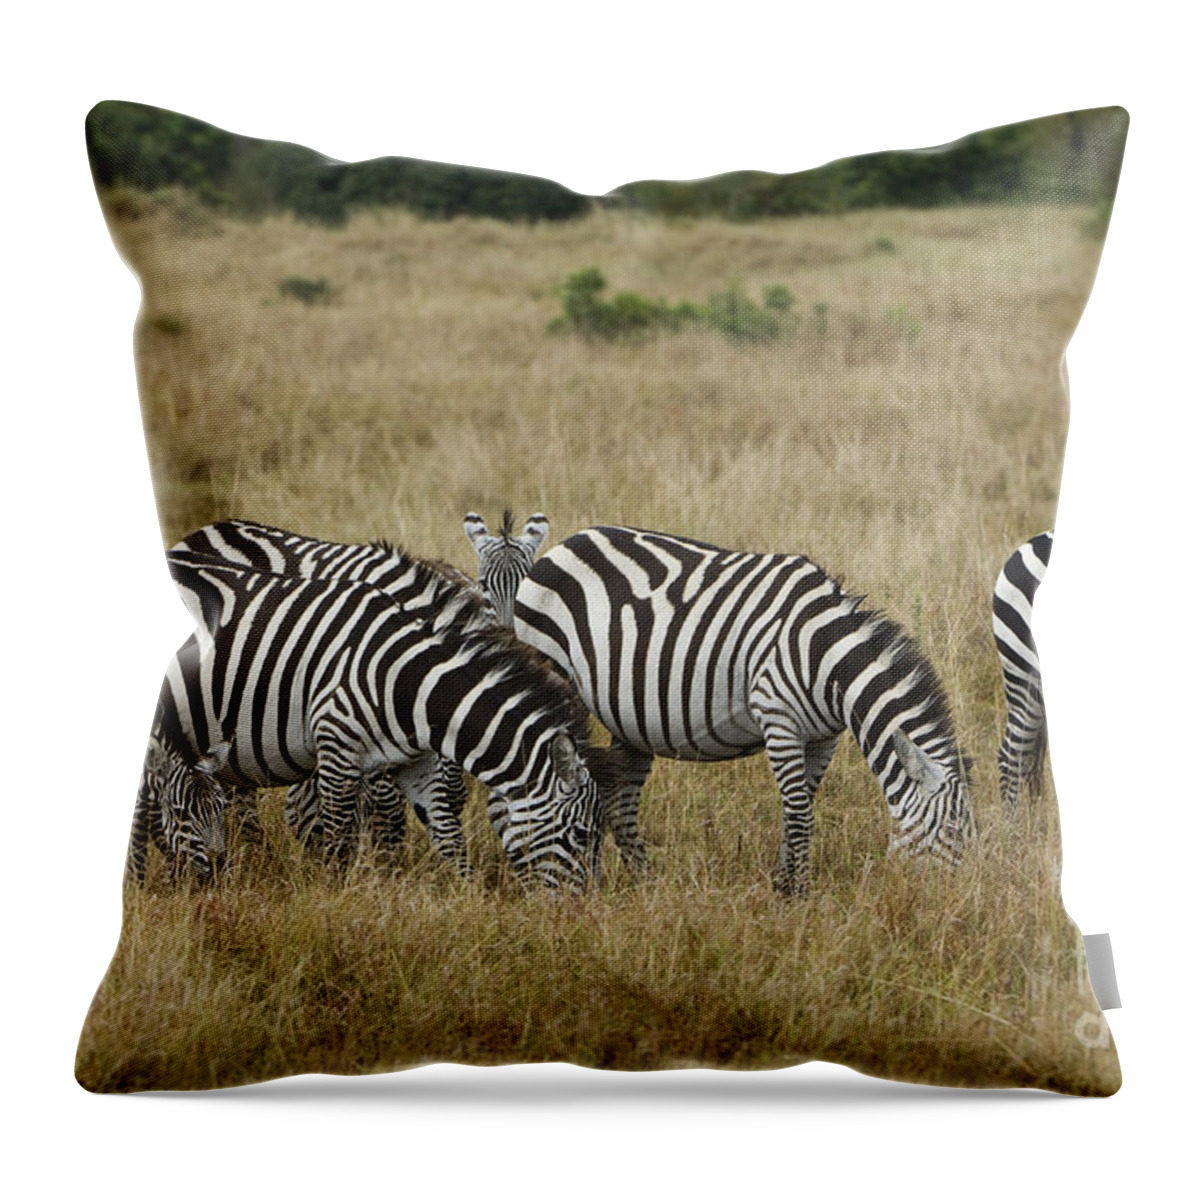 Africa Throw Pillow featuring the photograph Zebra On Masai Mara Plains by John Shaw